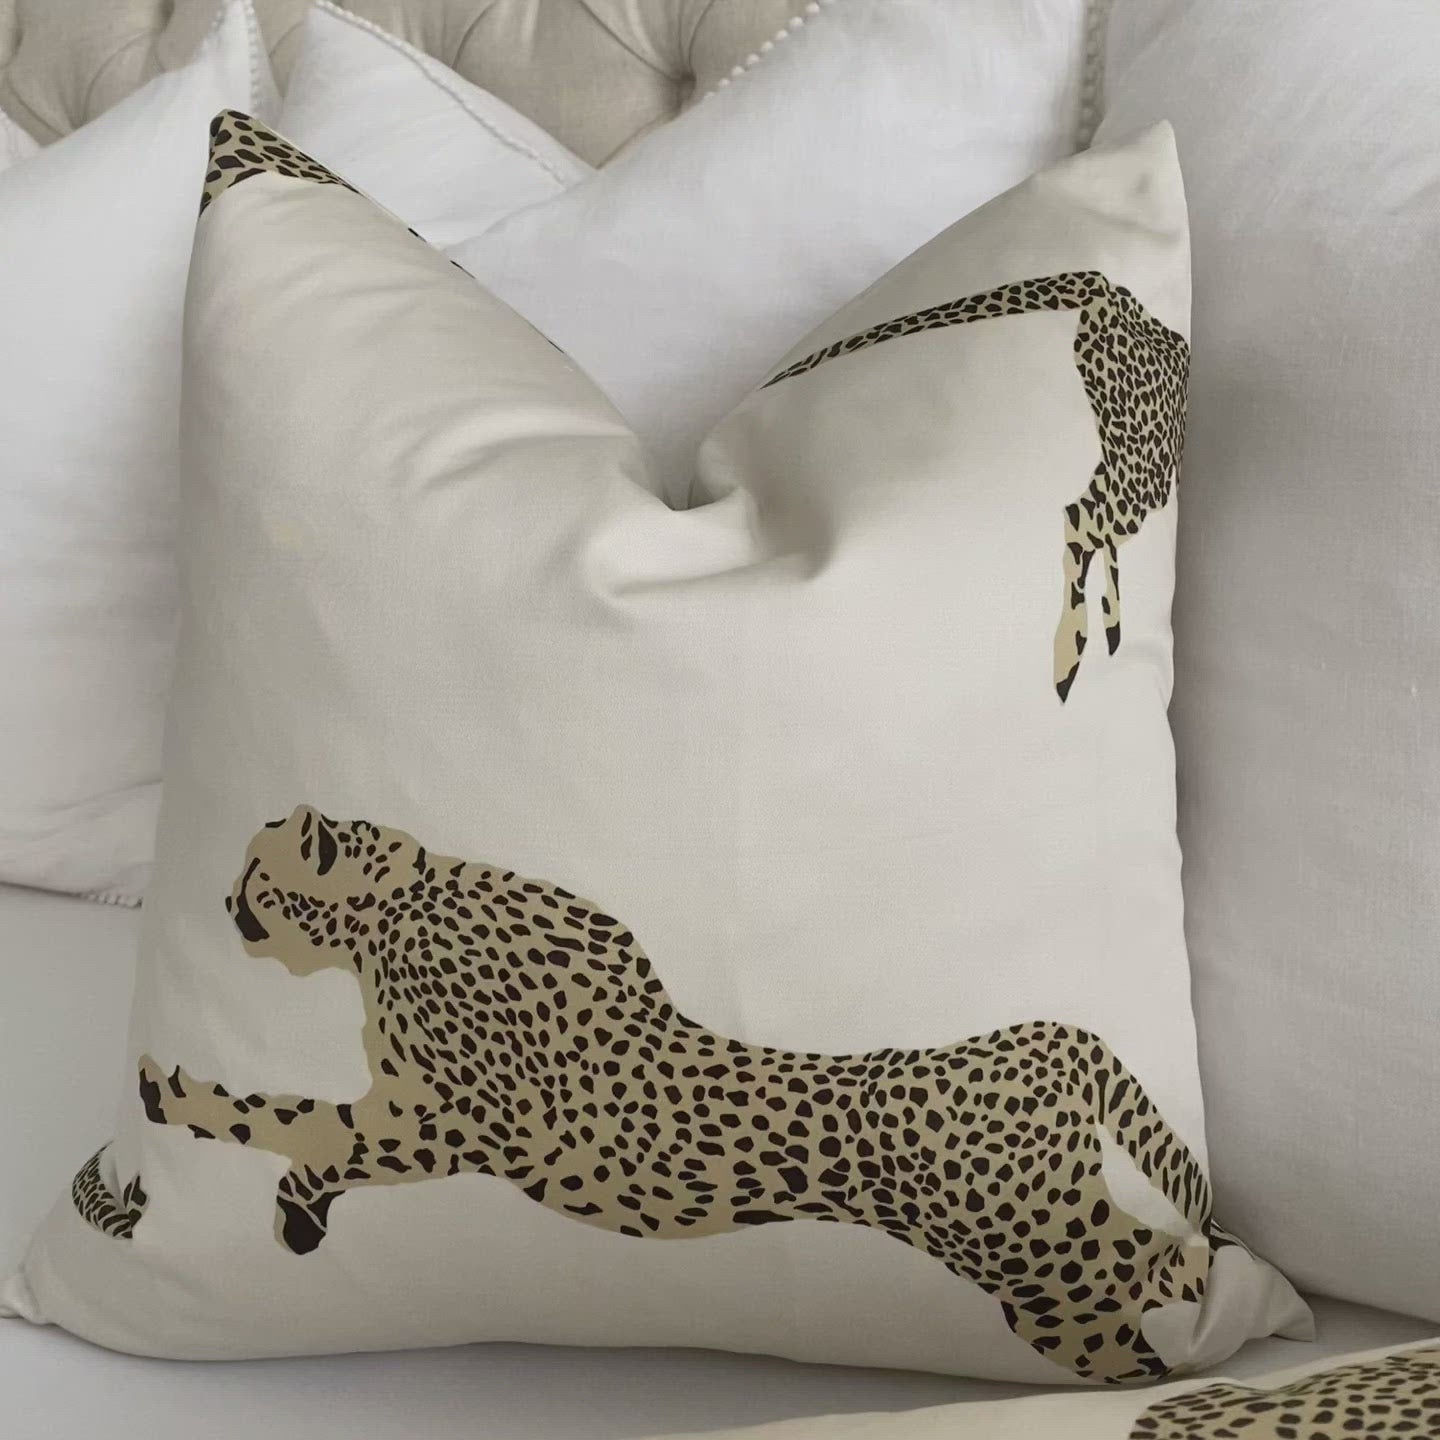 Scalamandre Leaping Cheetah Dune Beige Animal Print Designer Decorative Throw Pillow Cover Product Video